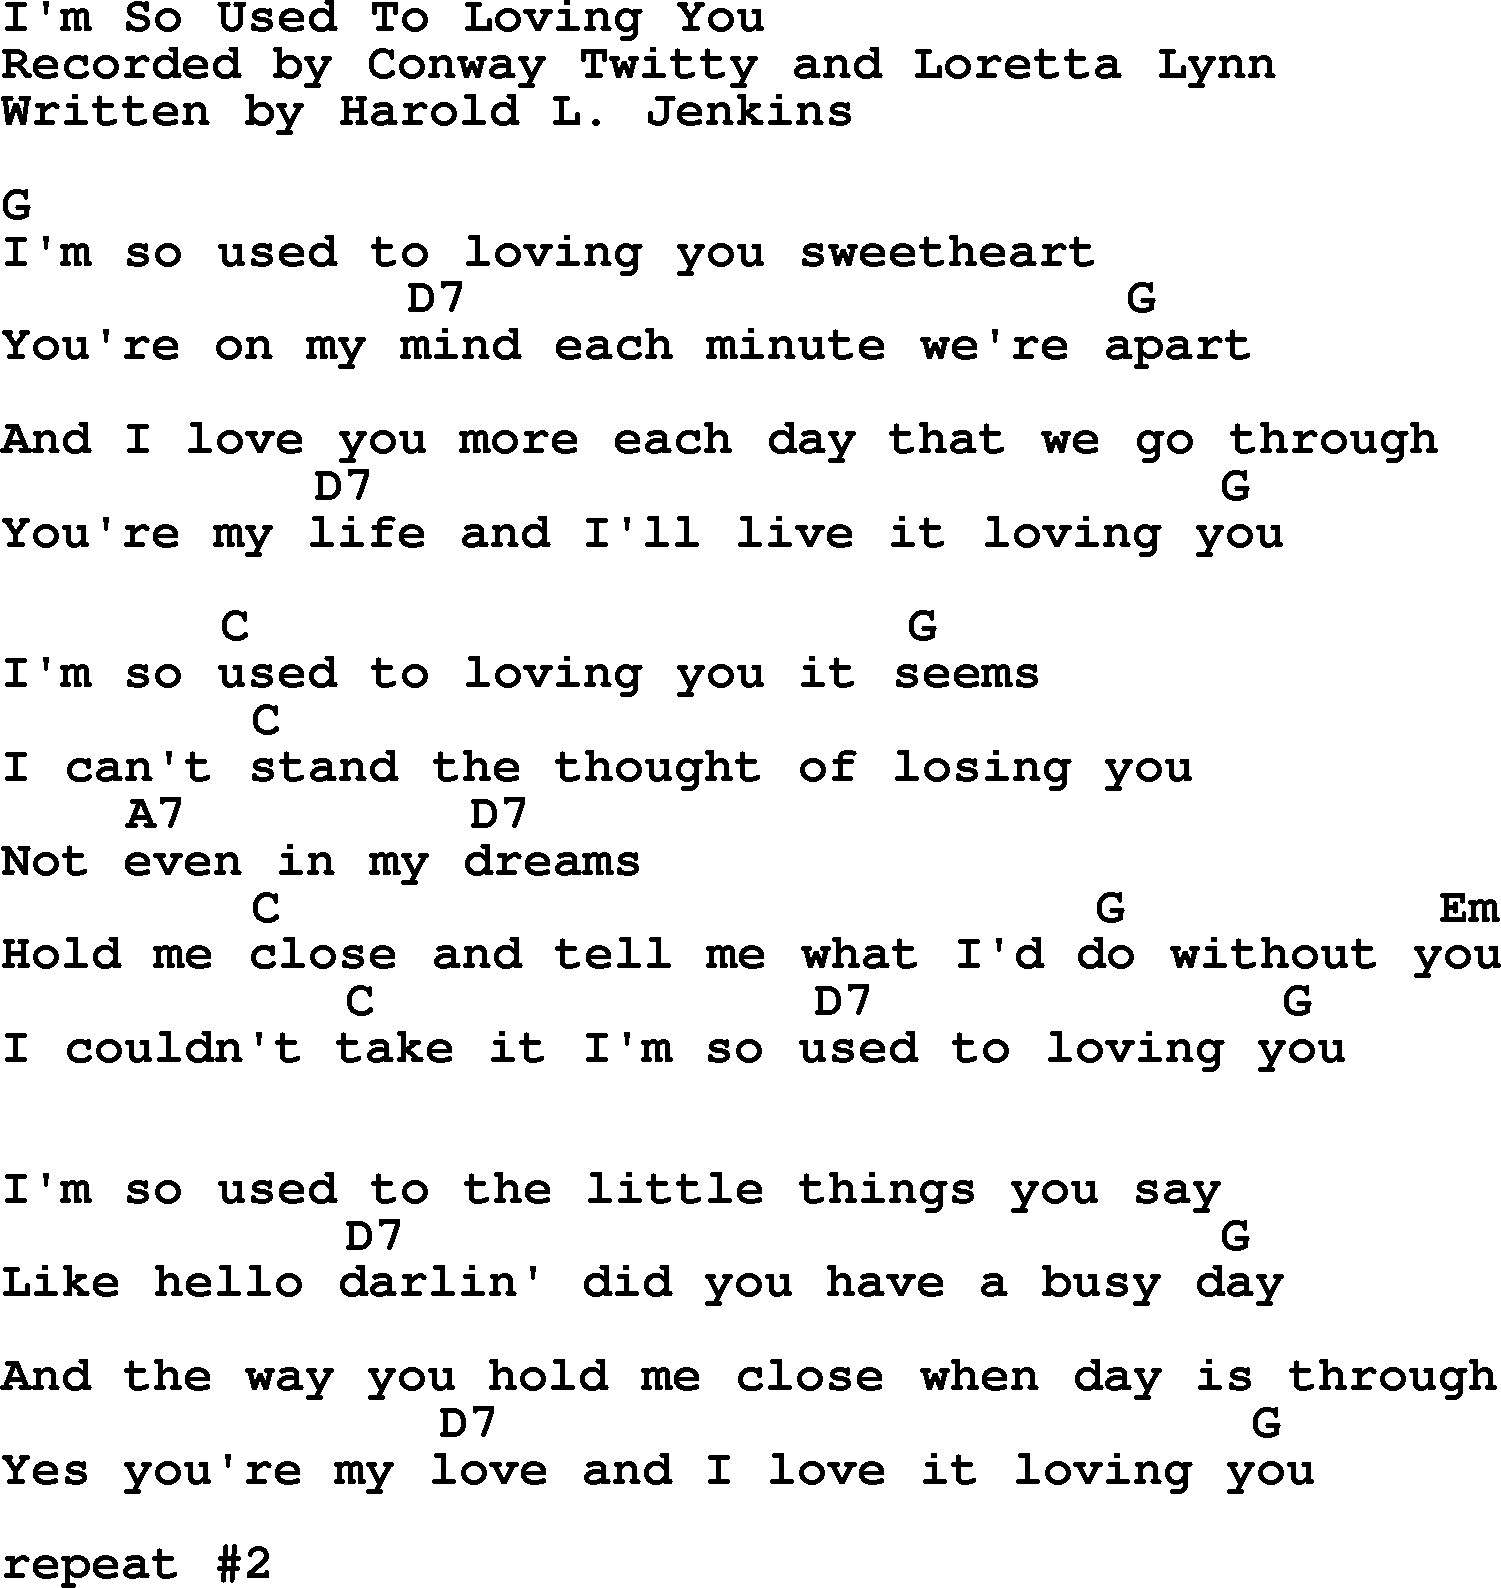 Loretta Lynn song: I'm So Used To Loving You lyrics and chords